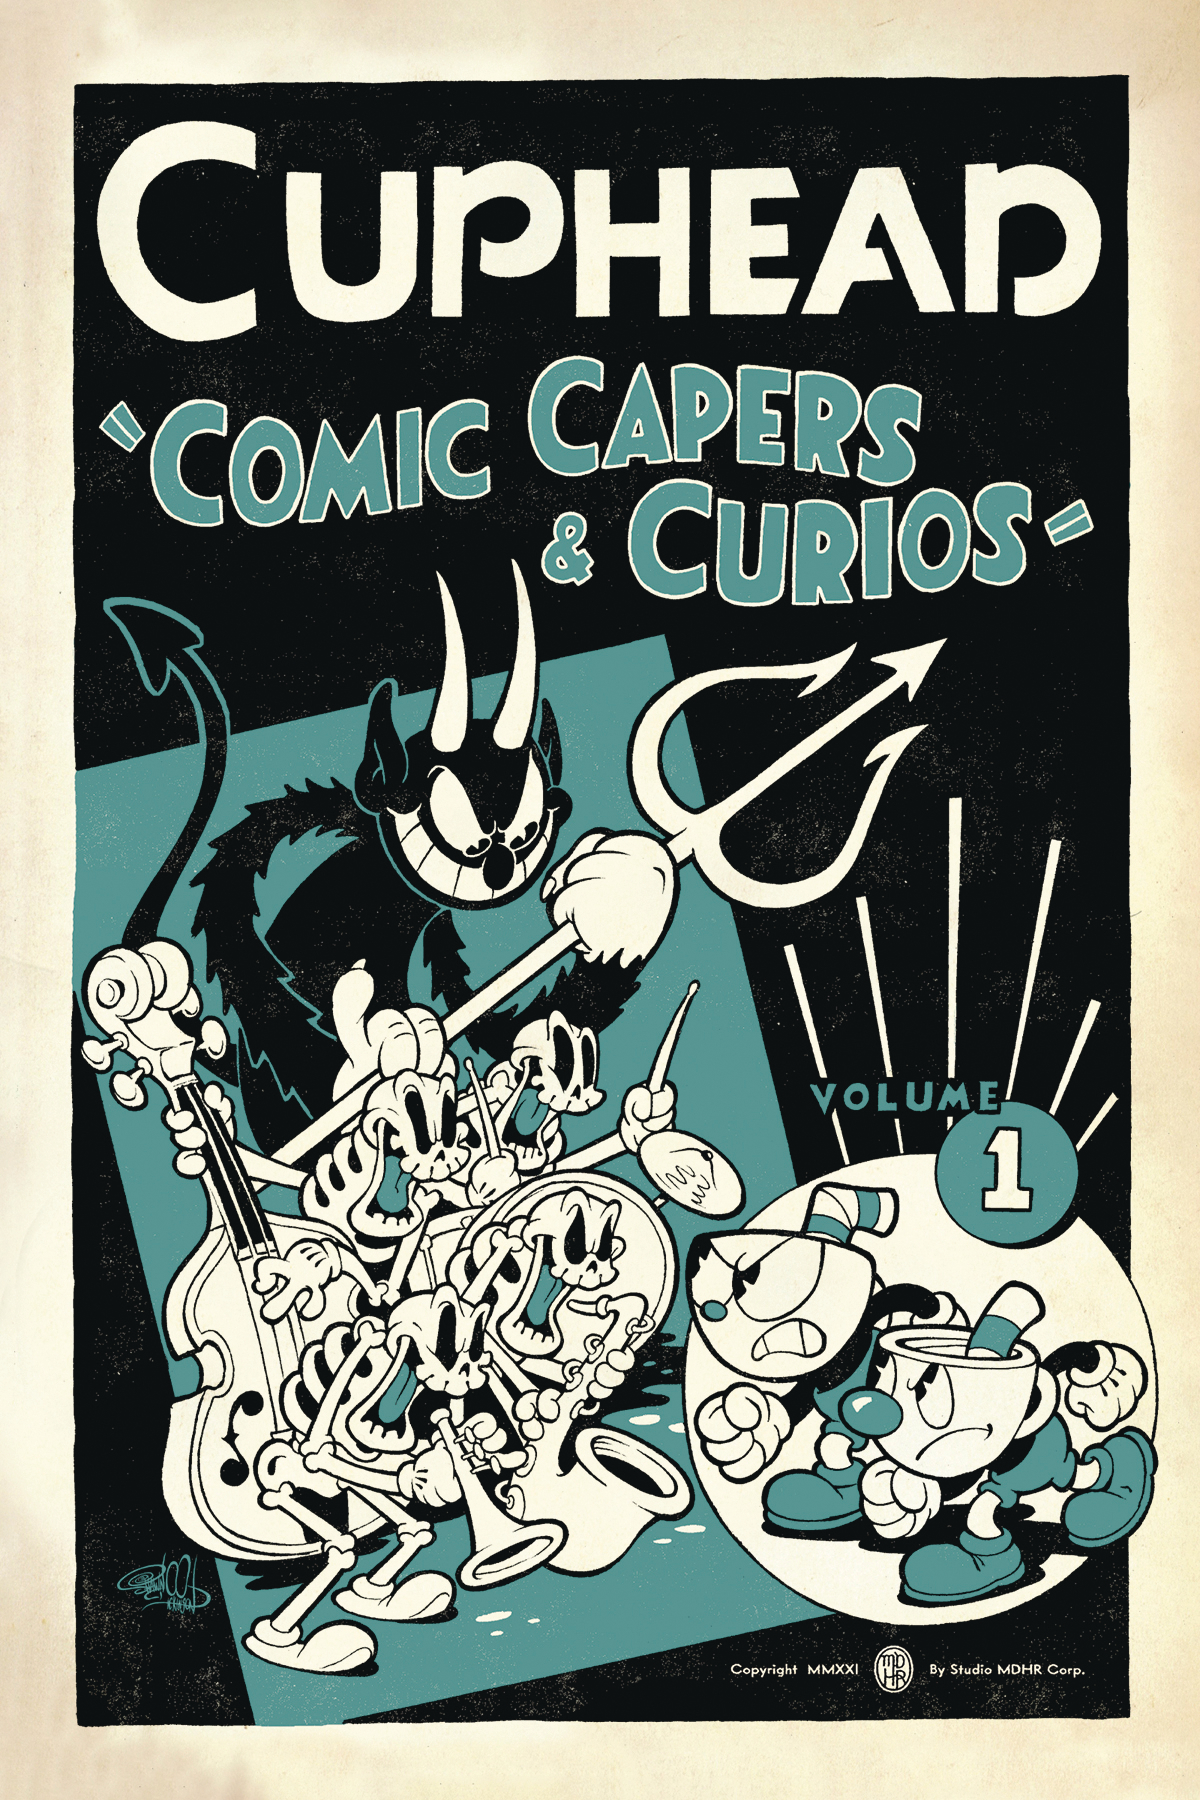 Cuphead Graphic Novel Volume 1 Comic Capers & Curios